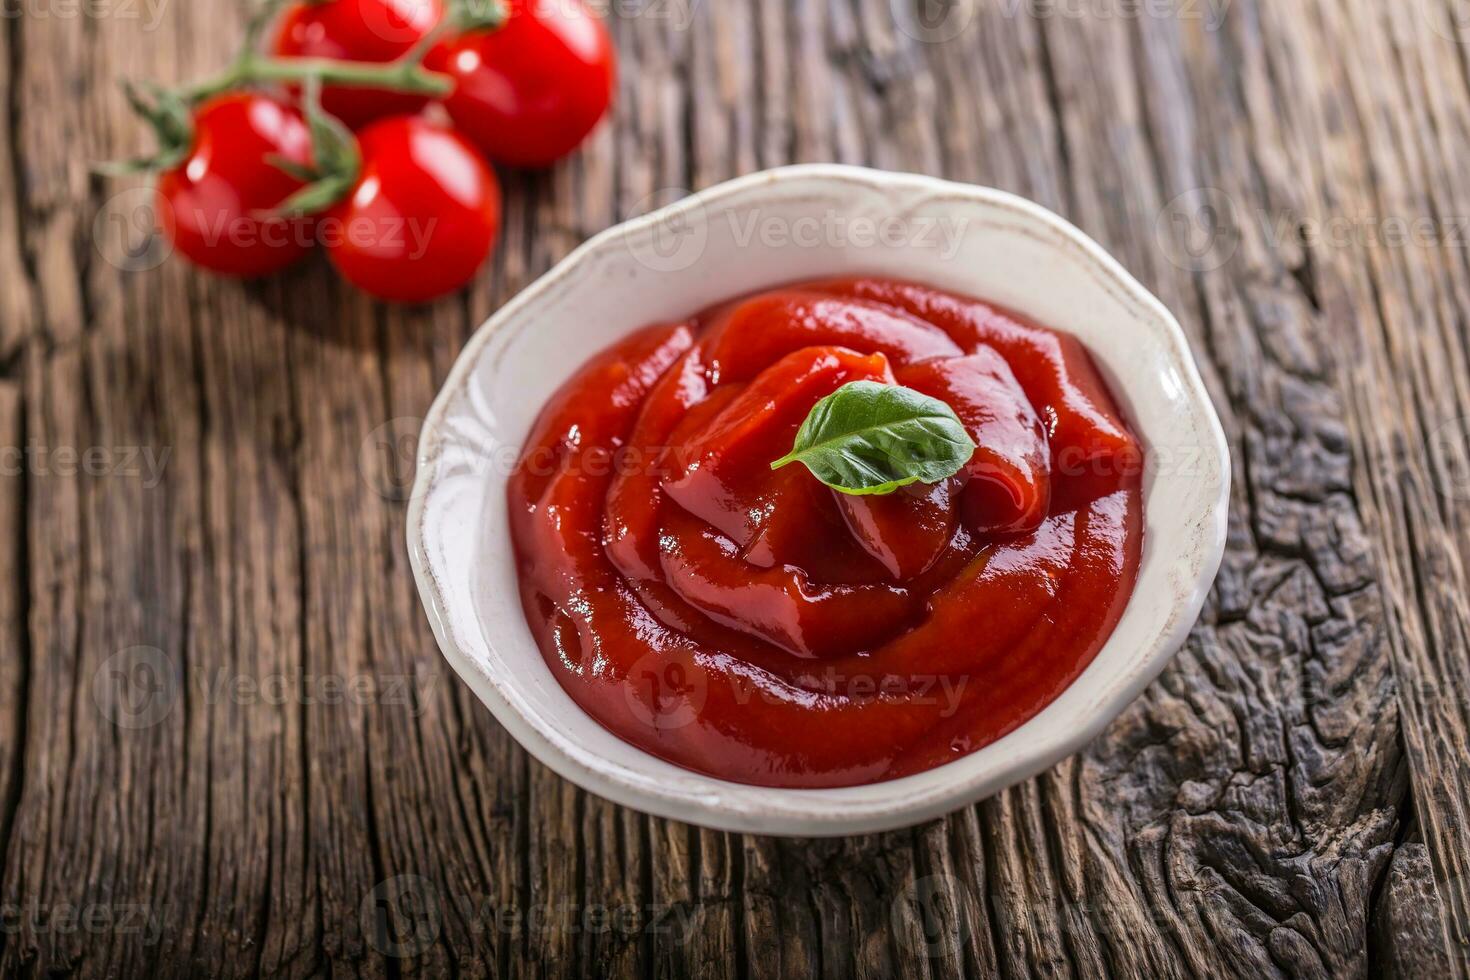 ketchup of tomaat saus in wit kom en kers tomaten Aan houten tafel. foto